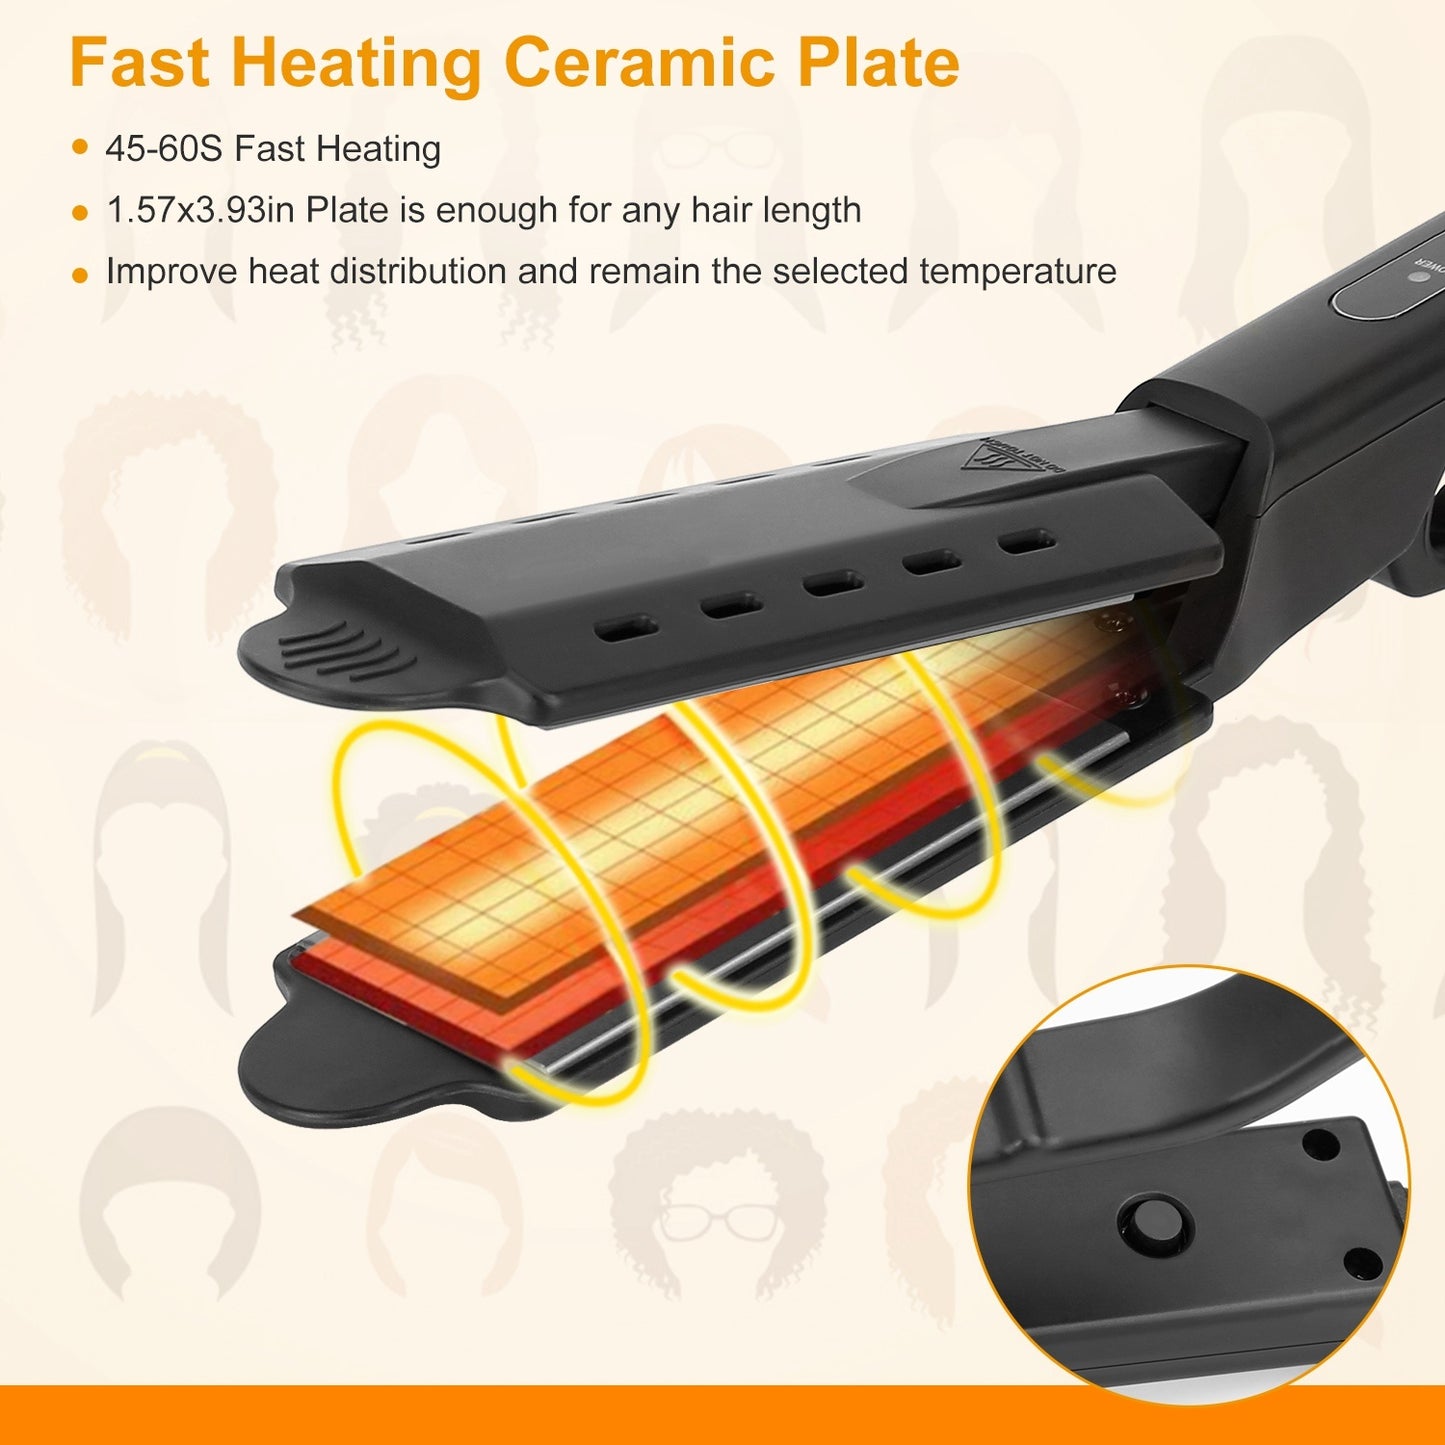 Ceramic Flat Iron Hair Straightener with 4 Temperature Settings.